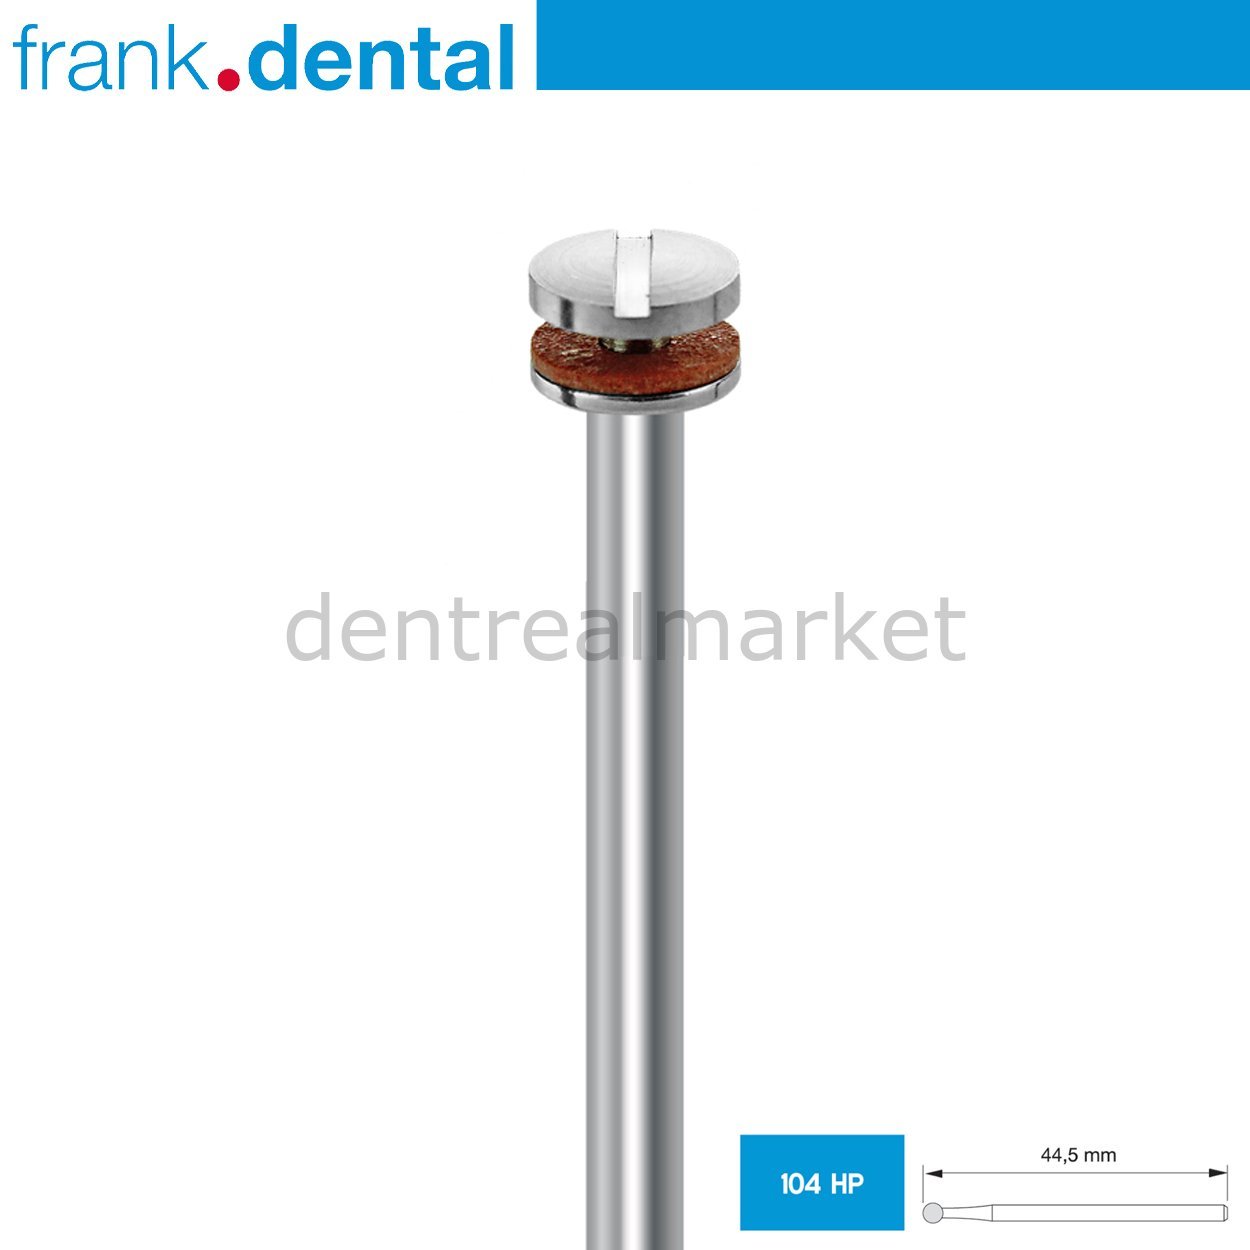 DentrealStore - Frank Dental Separate Mandrel - For Handpiece - 5 Pcs